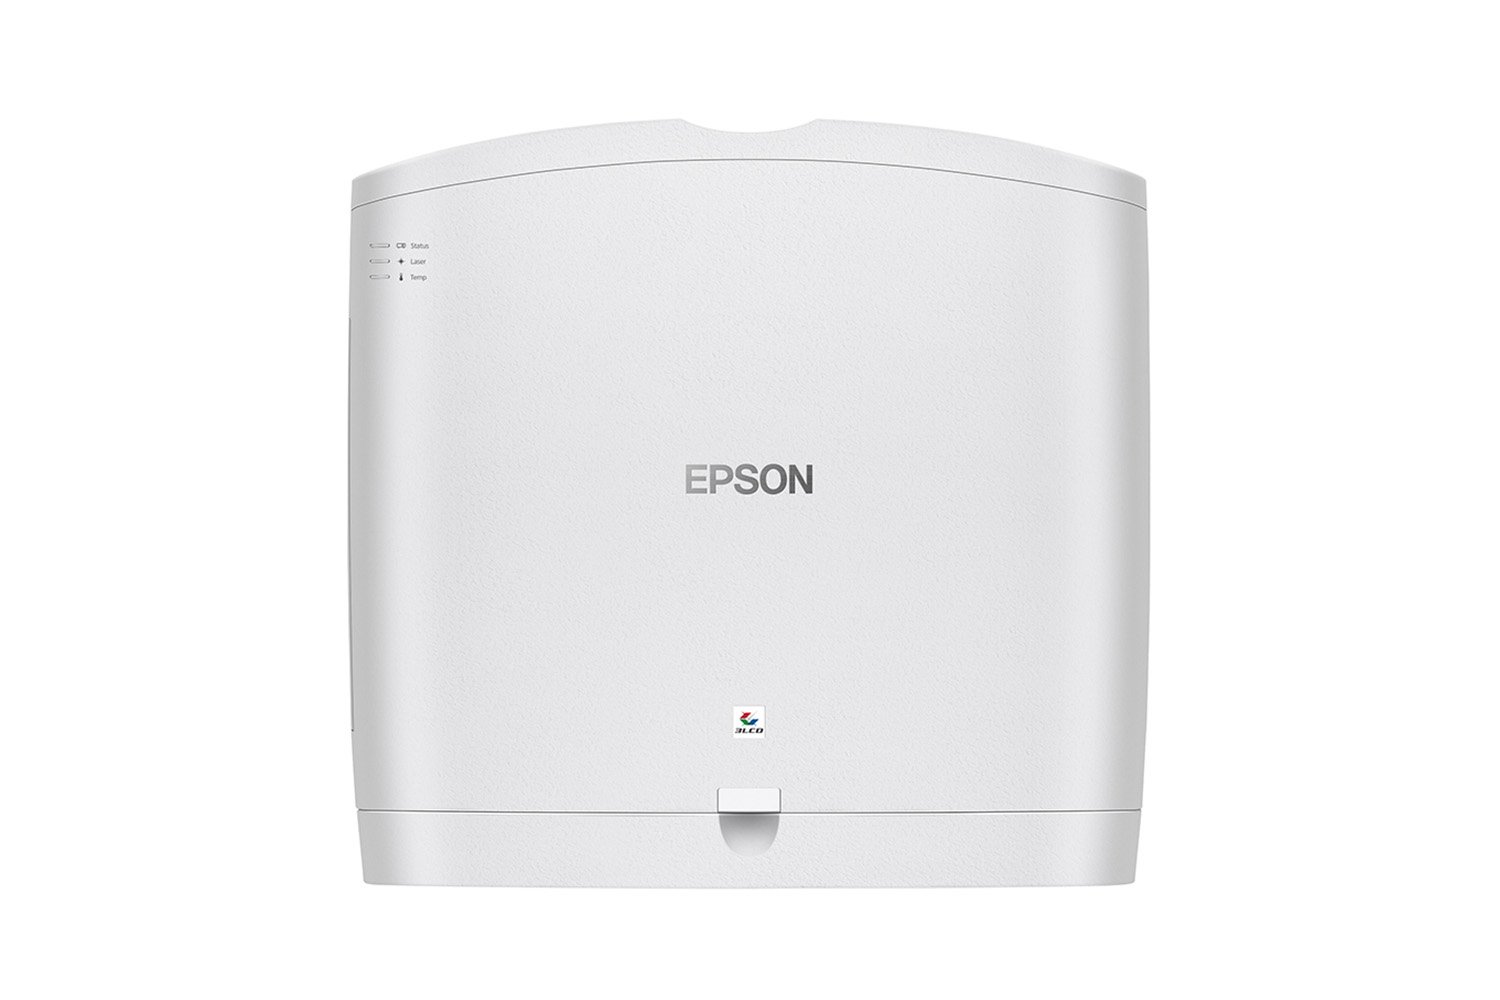 Epson EH-LS11000W - Laser 4K UltraHD HDR Beamer - HEIMKINORAUM Edition